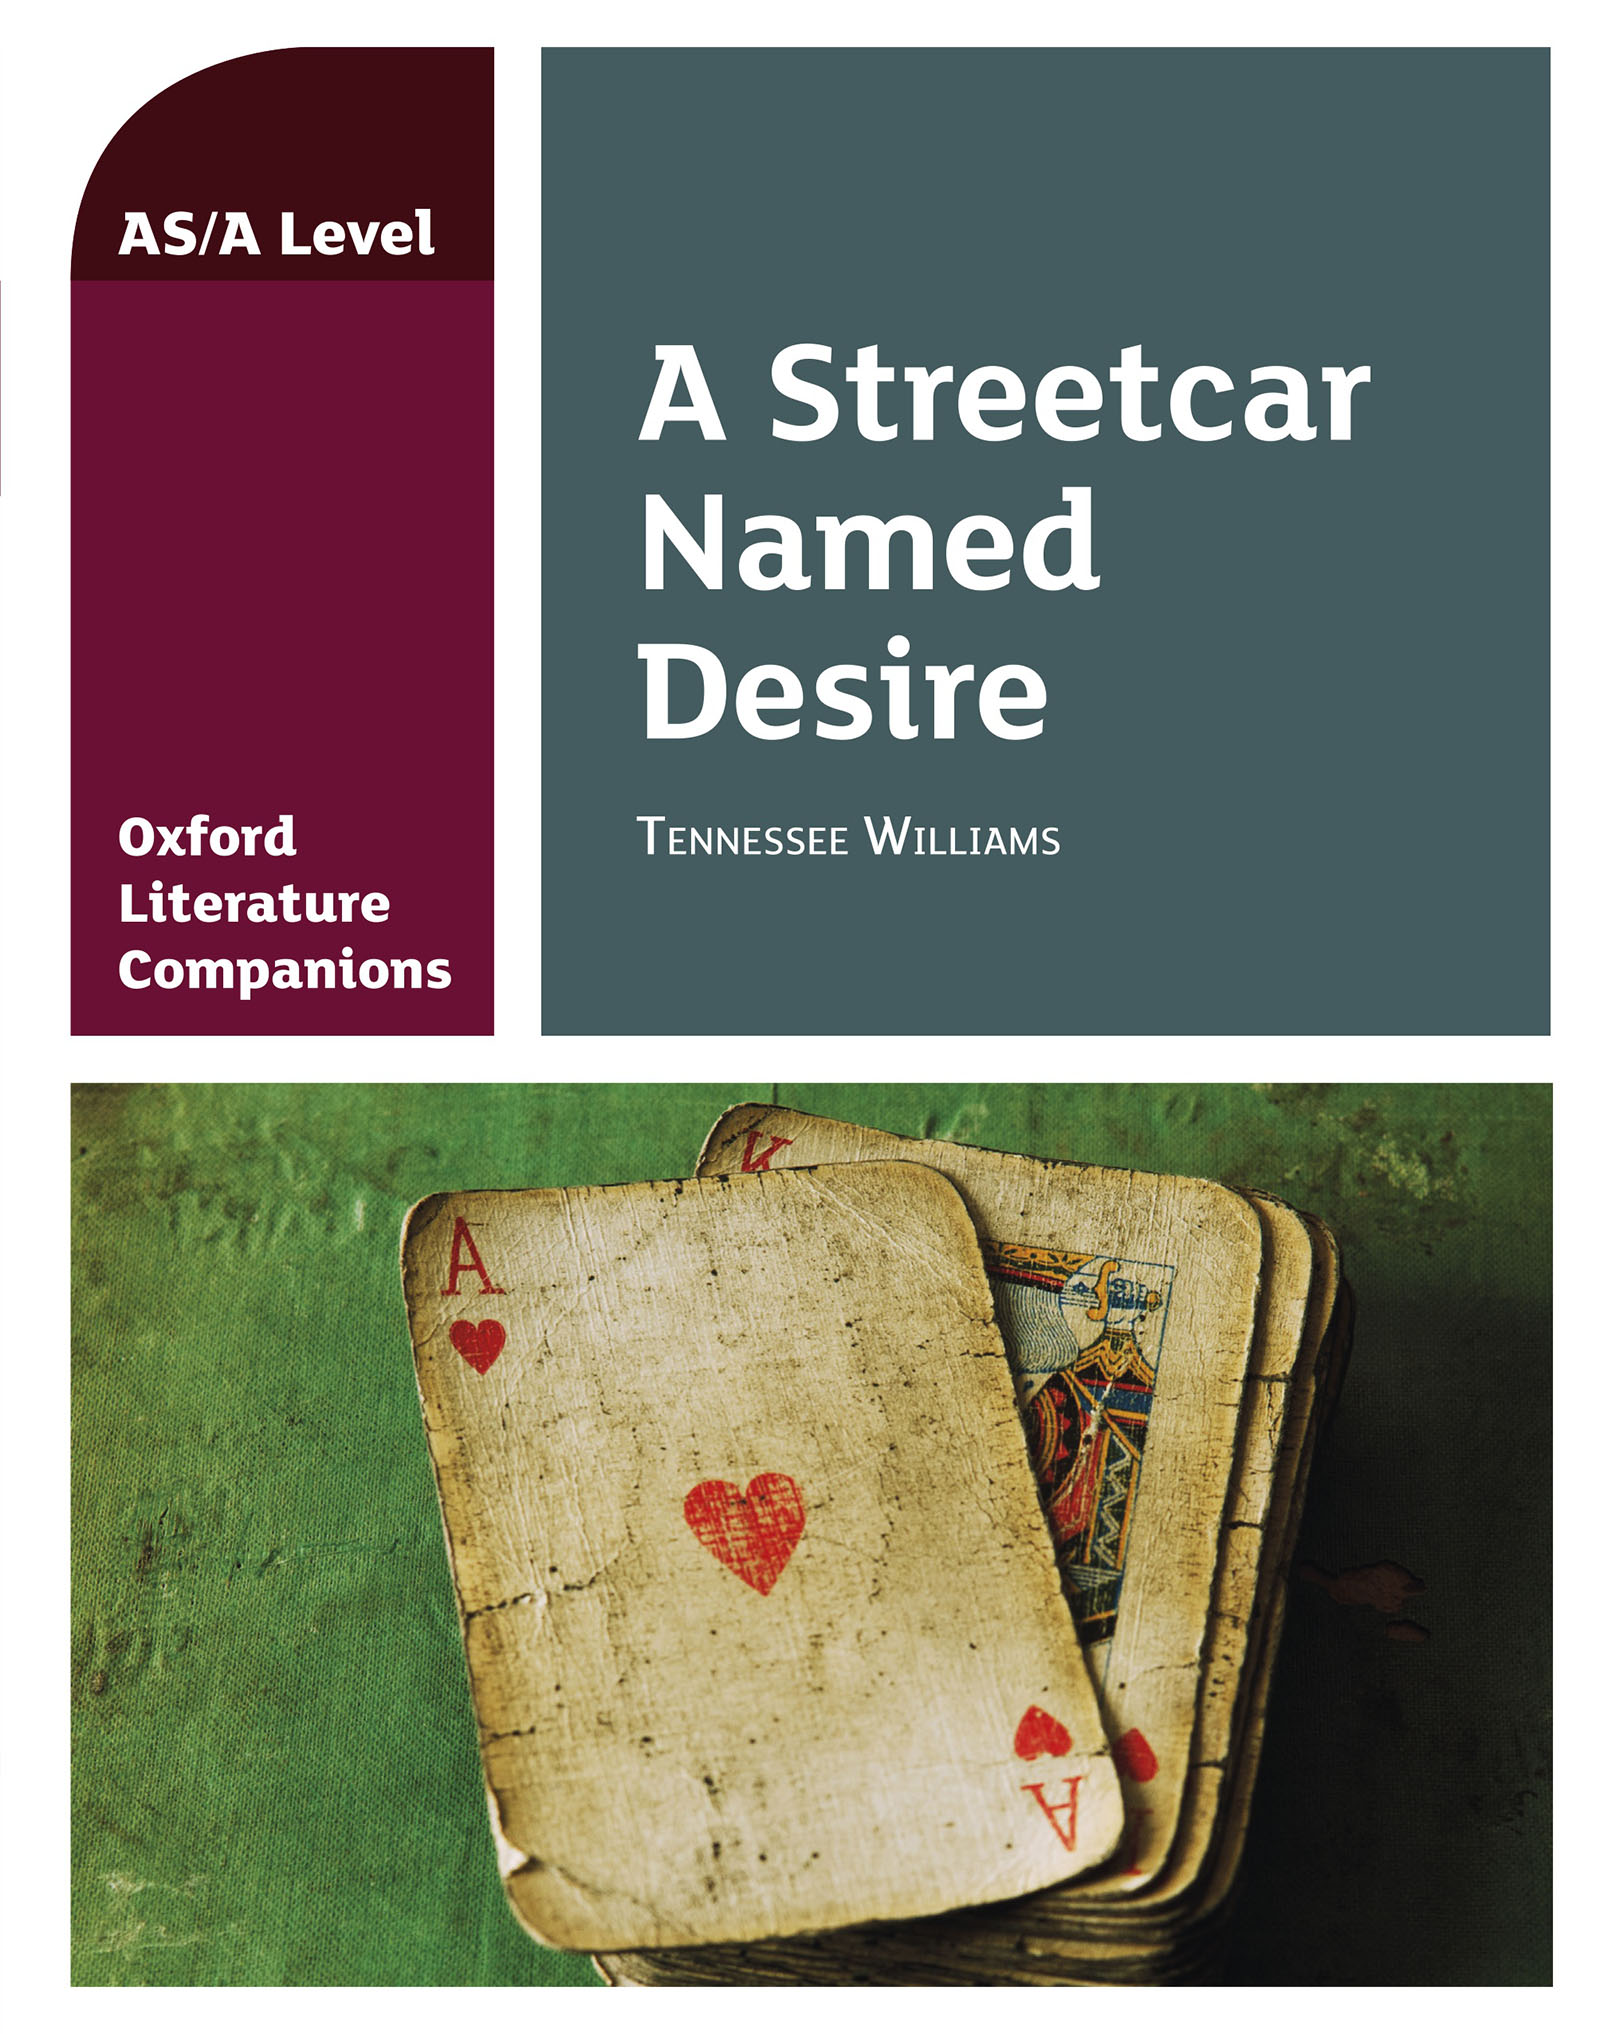 Oxford Literature Companions A Streetcar Named Desire